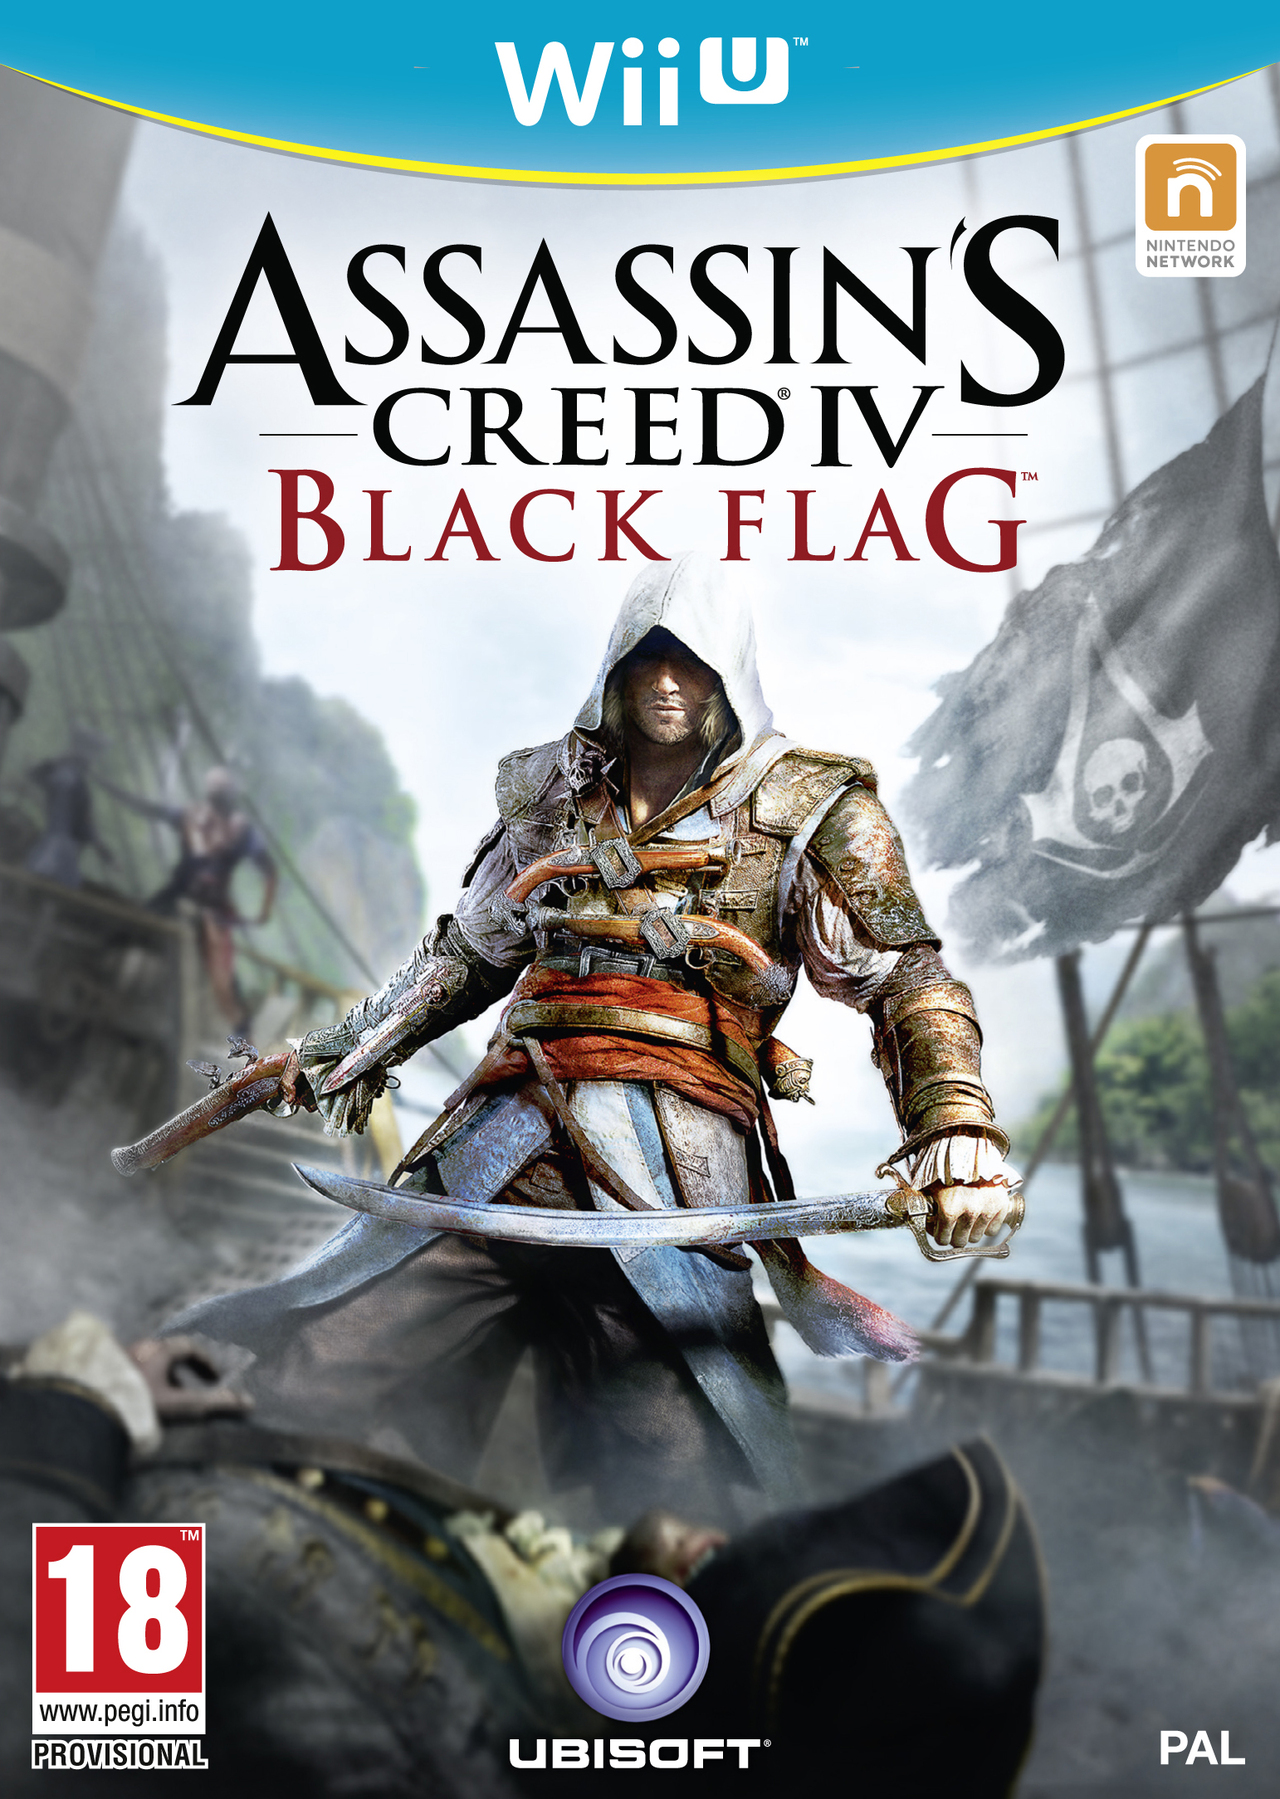 http://image.jeuxvideo.com/images/jaquettes/00047807/jaquette-assassin-s-creed-iv-black-flag-wii-u-wiiu-cover-avant-g-1362057881.jpg